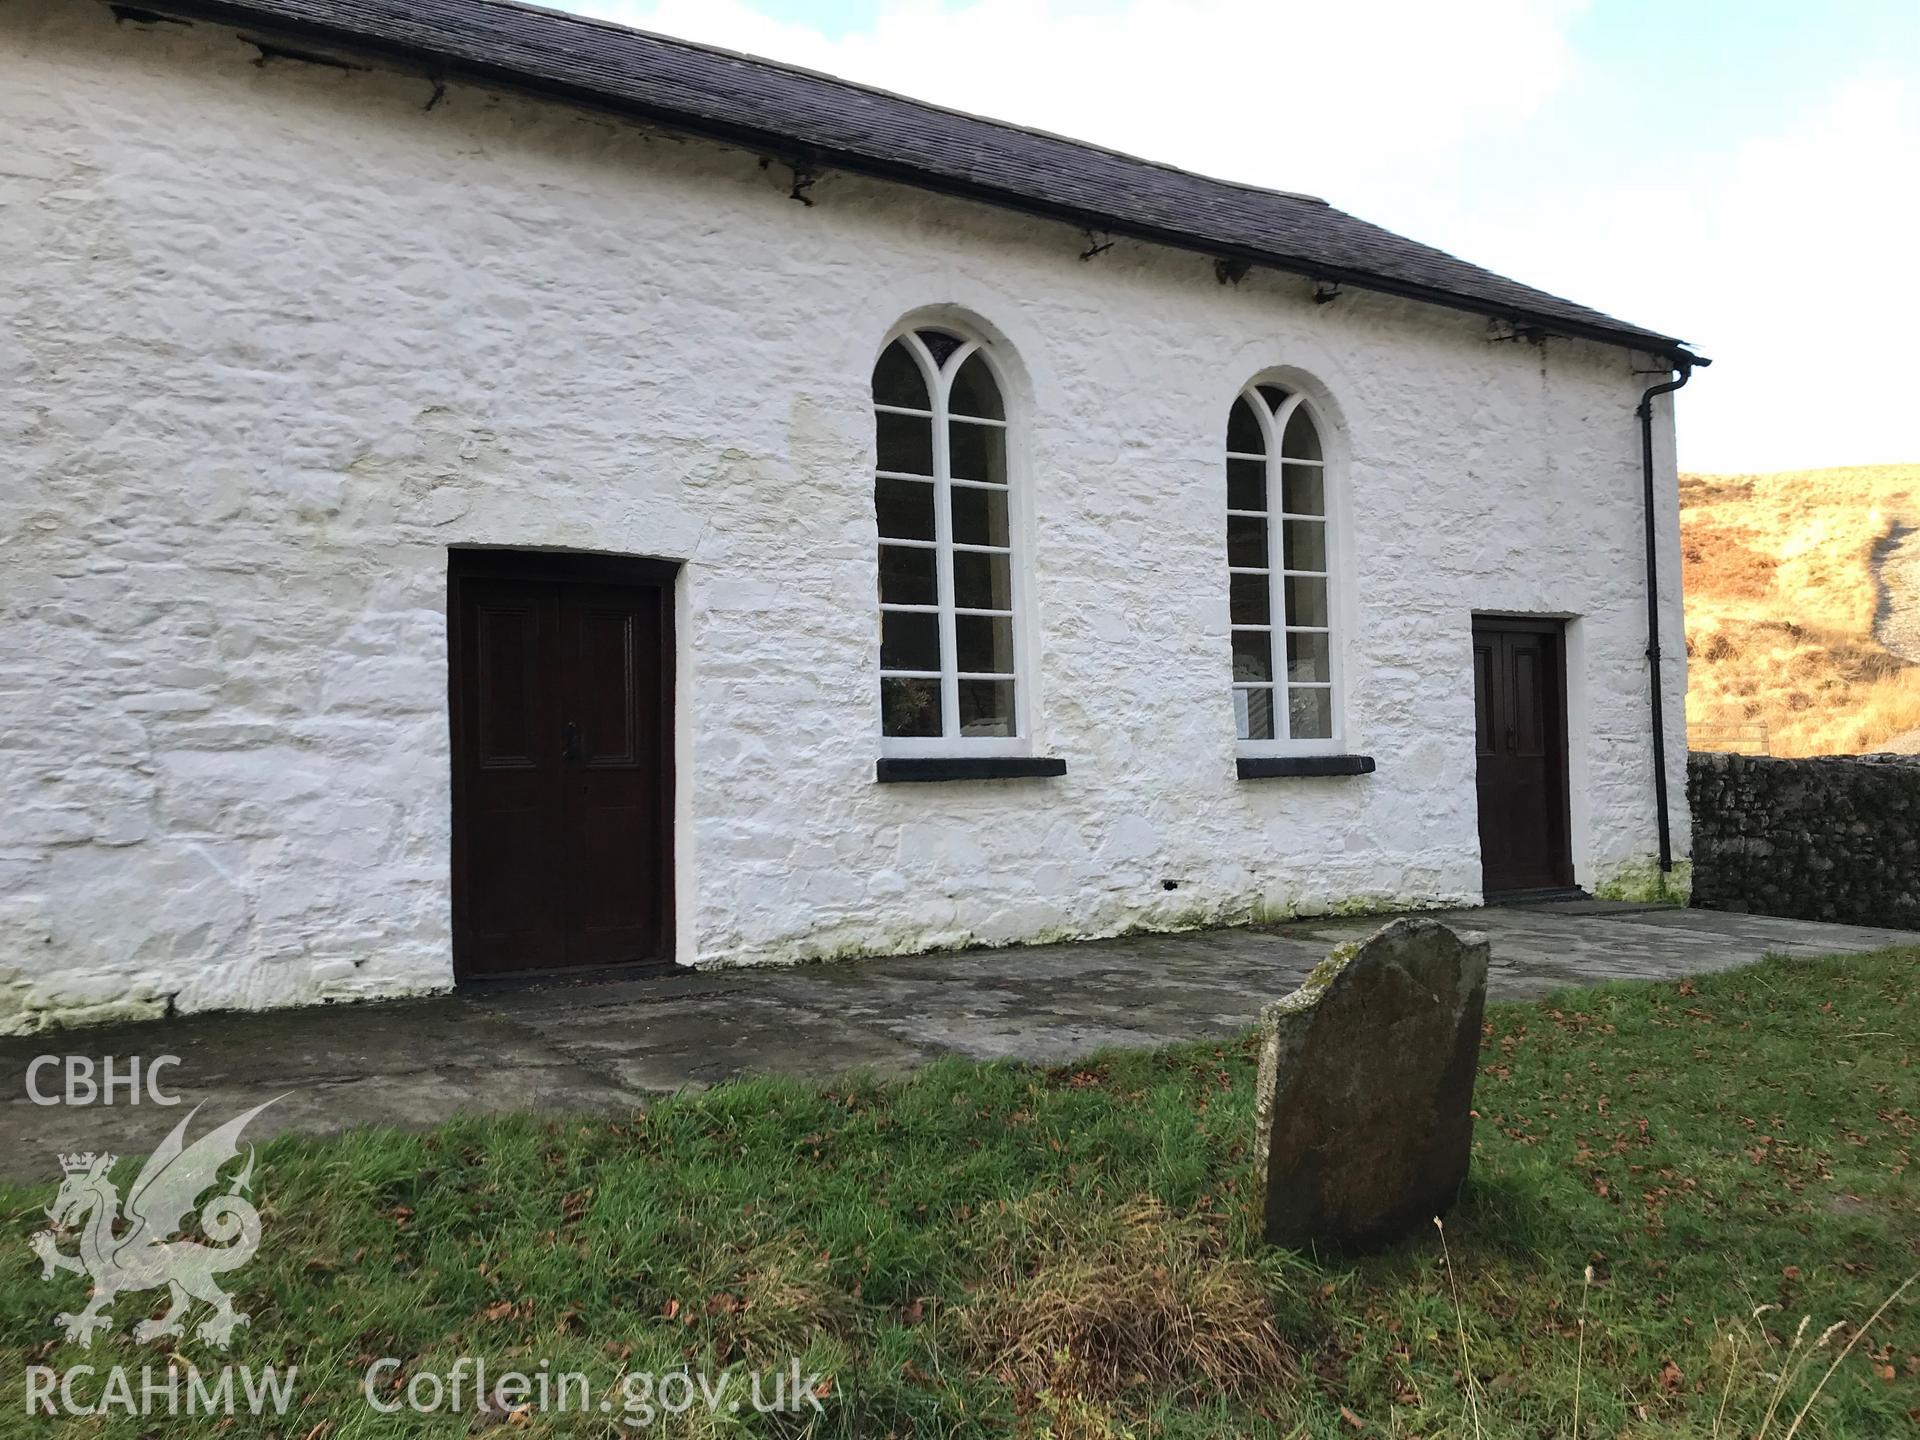 Exterior view showing side elevation of Soar-y-Mynydd Welsh Calvinistic Methodist chapel, Llanddewi Brefi. Colour photograph taken by Paul R. Davis on 17th November 2018.